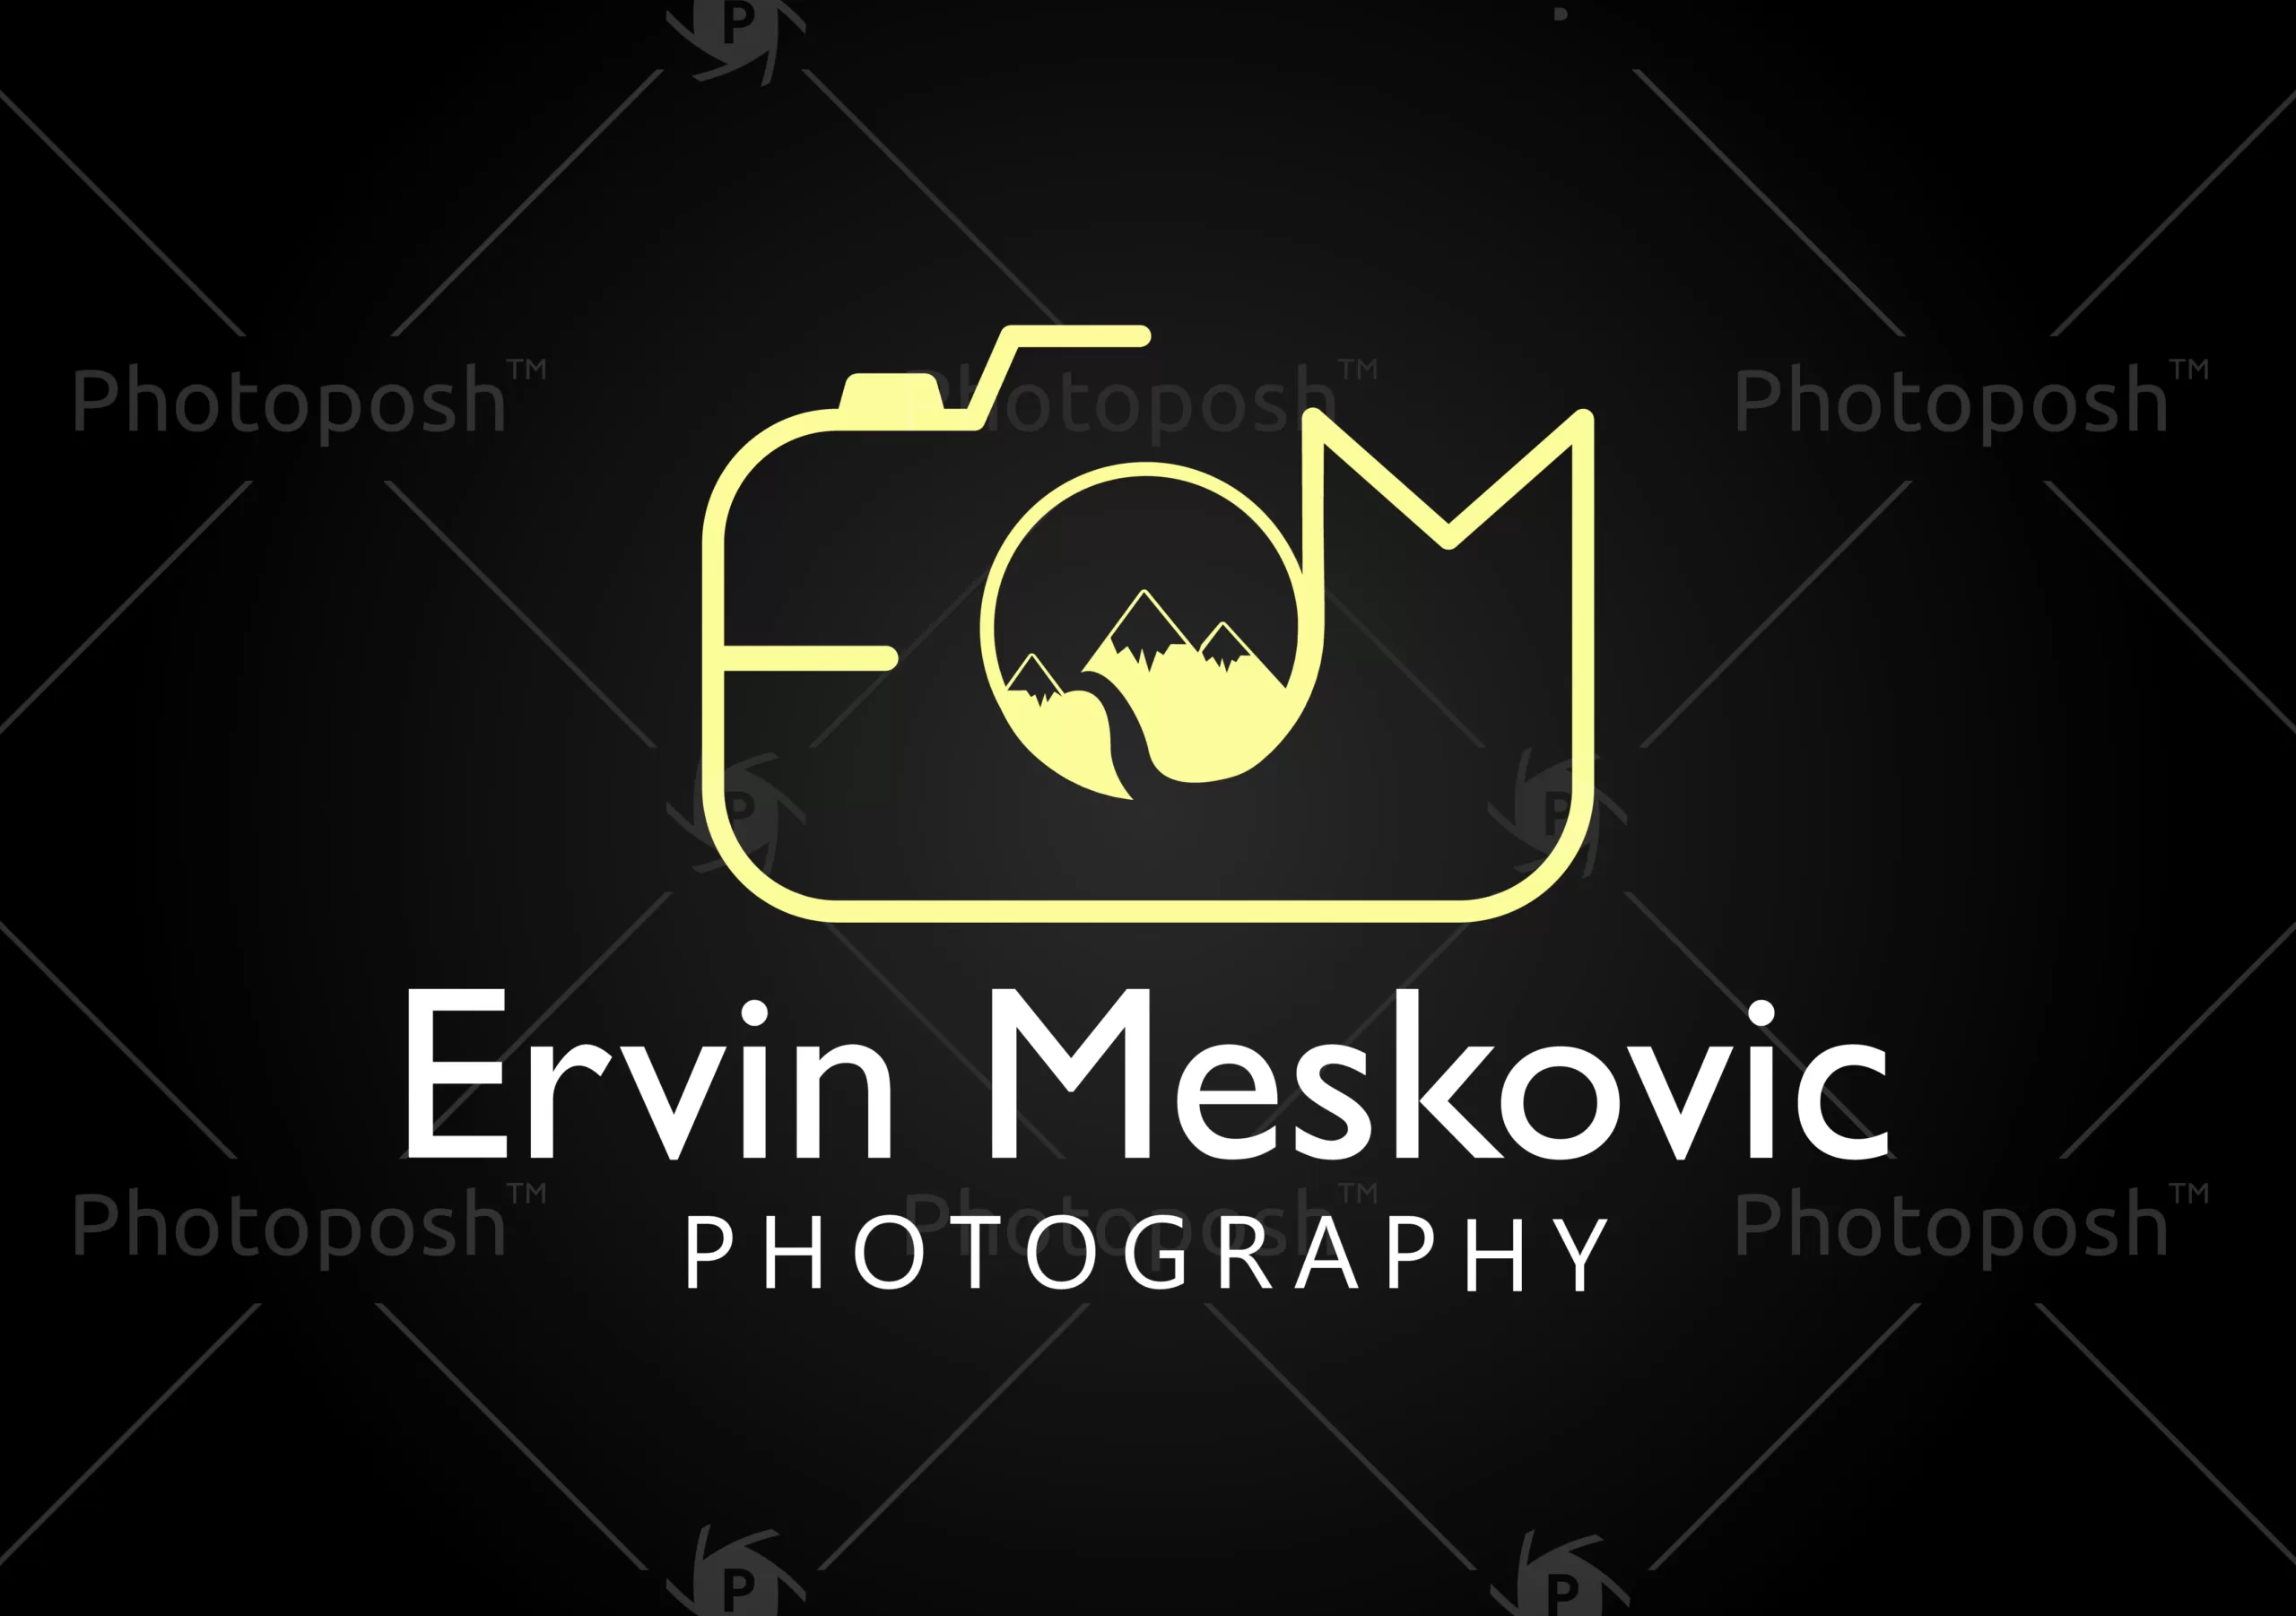 photography logo | landscape